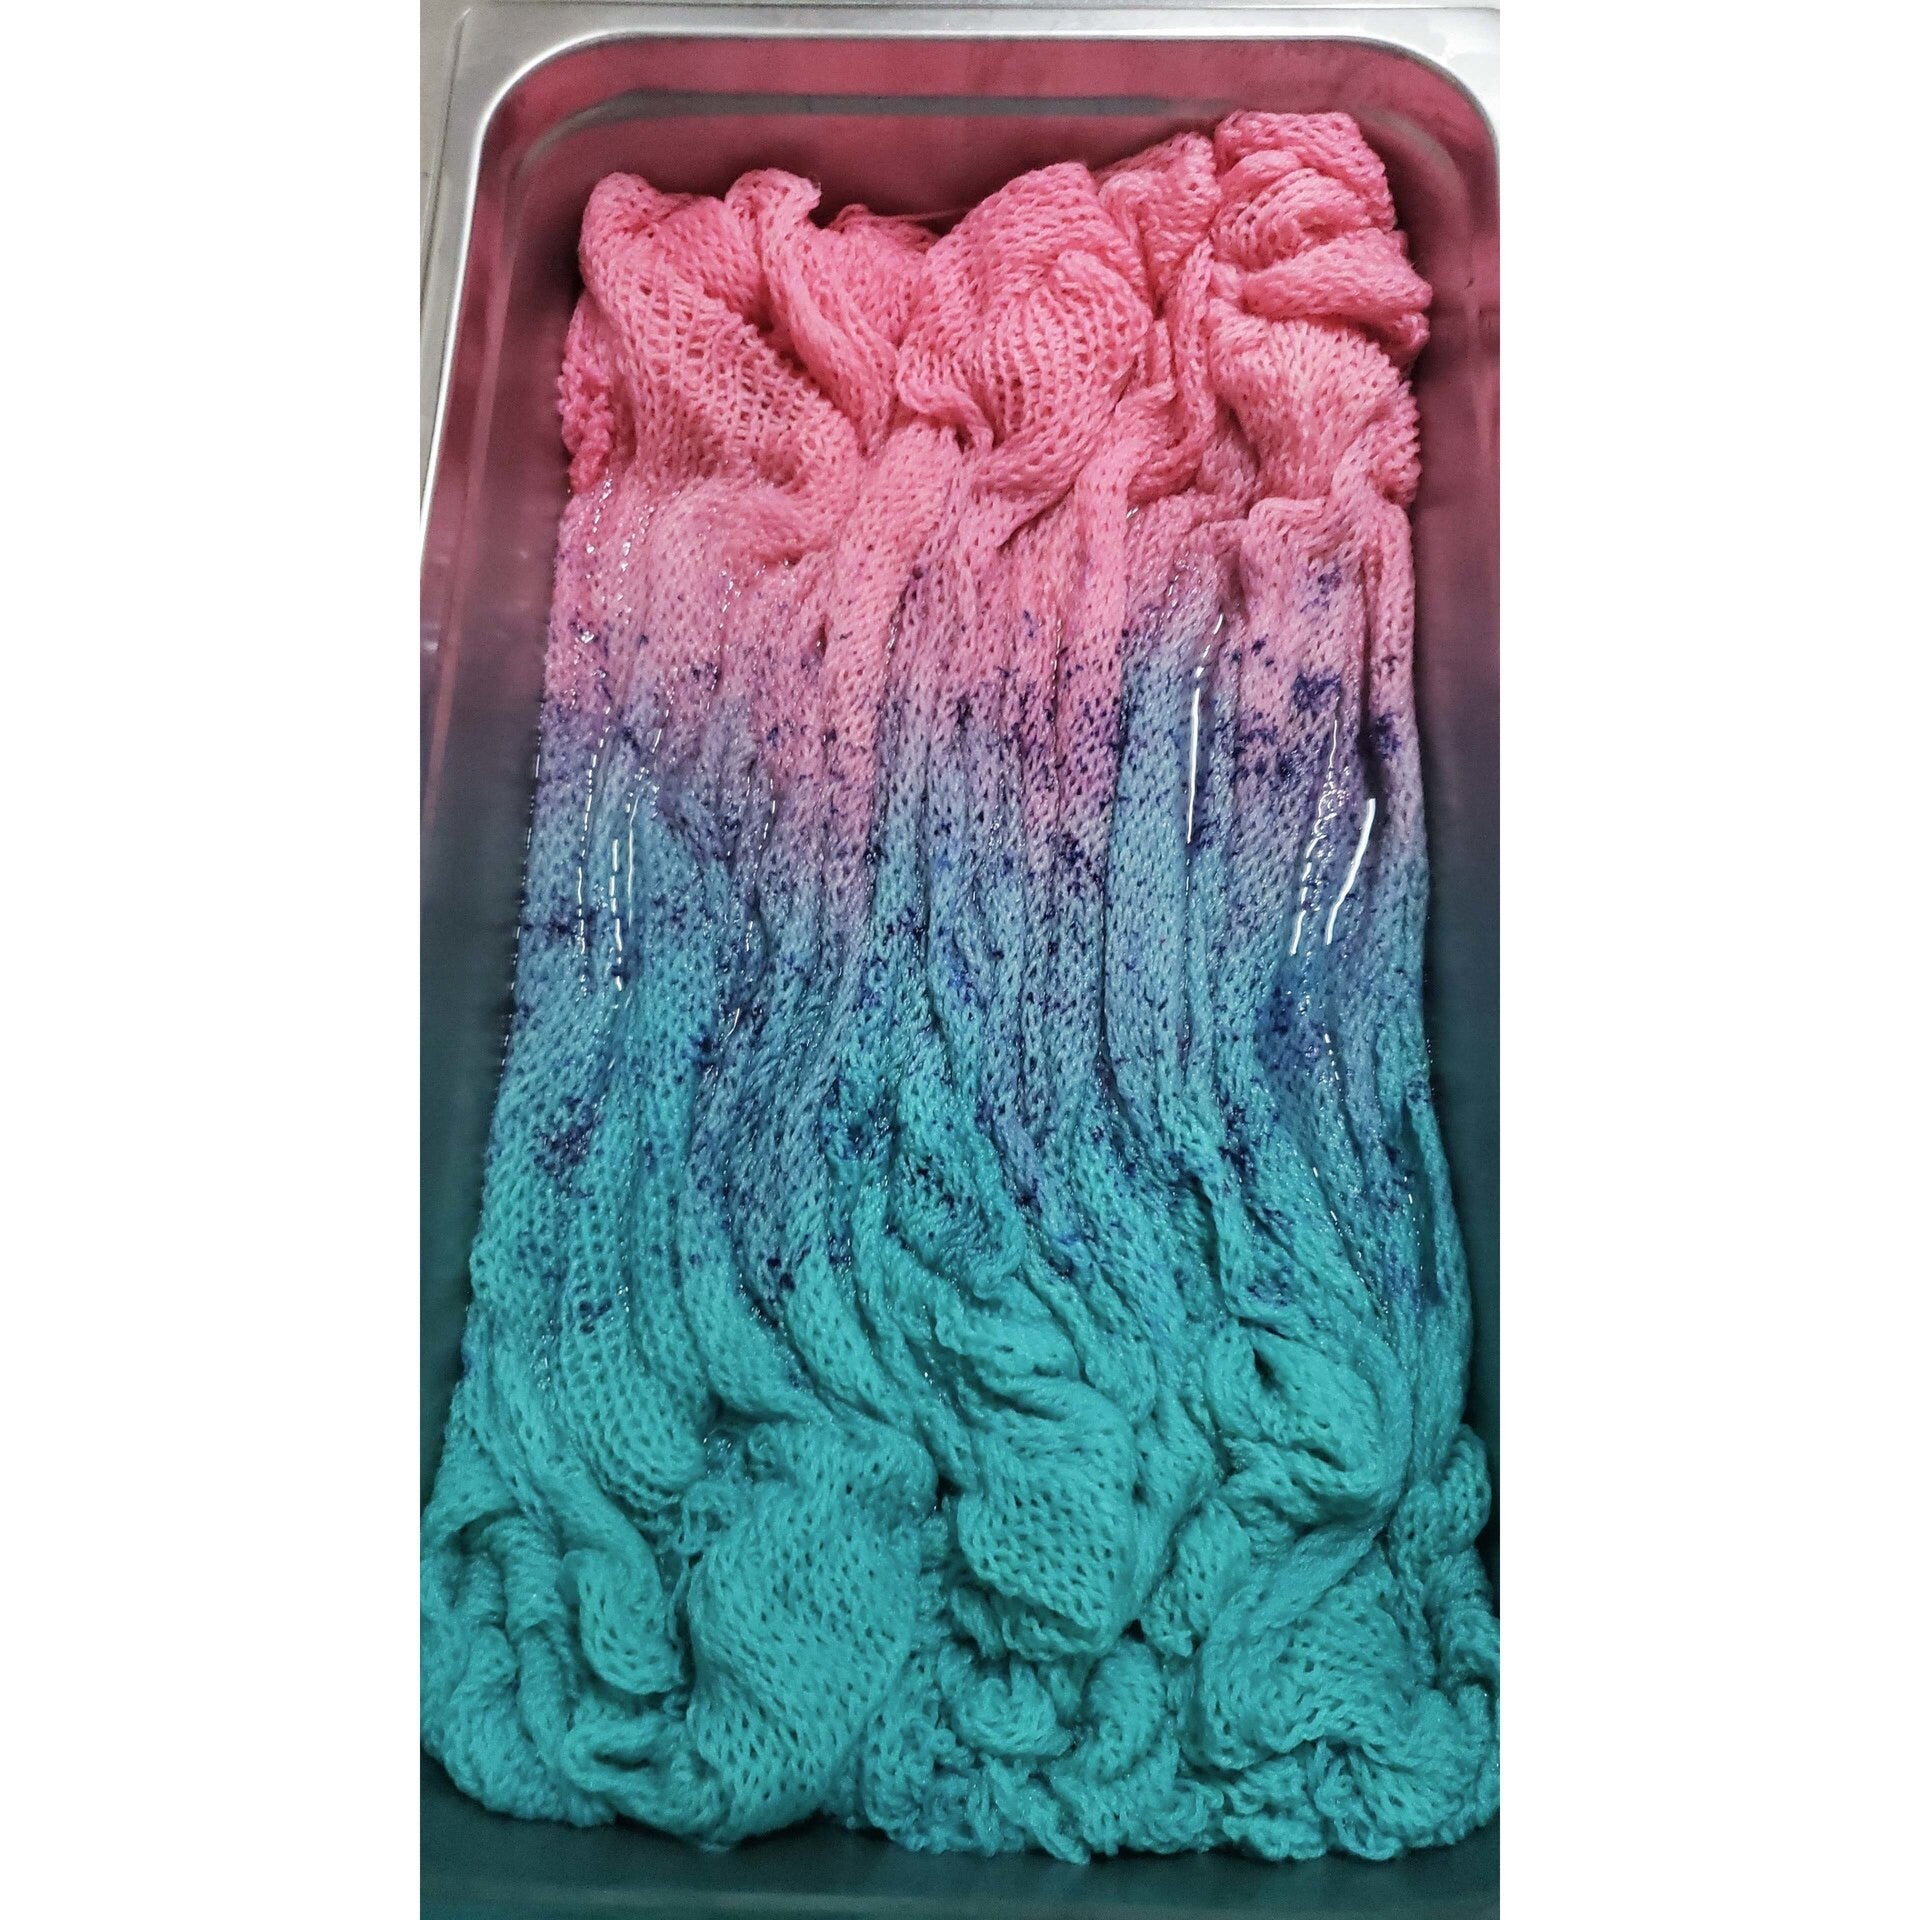 Sugar High - Llively Sock Twins Hand Dyed Speckle Gradient Sock Yarn Set